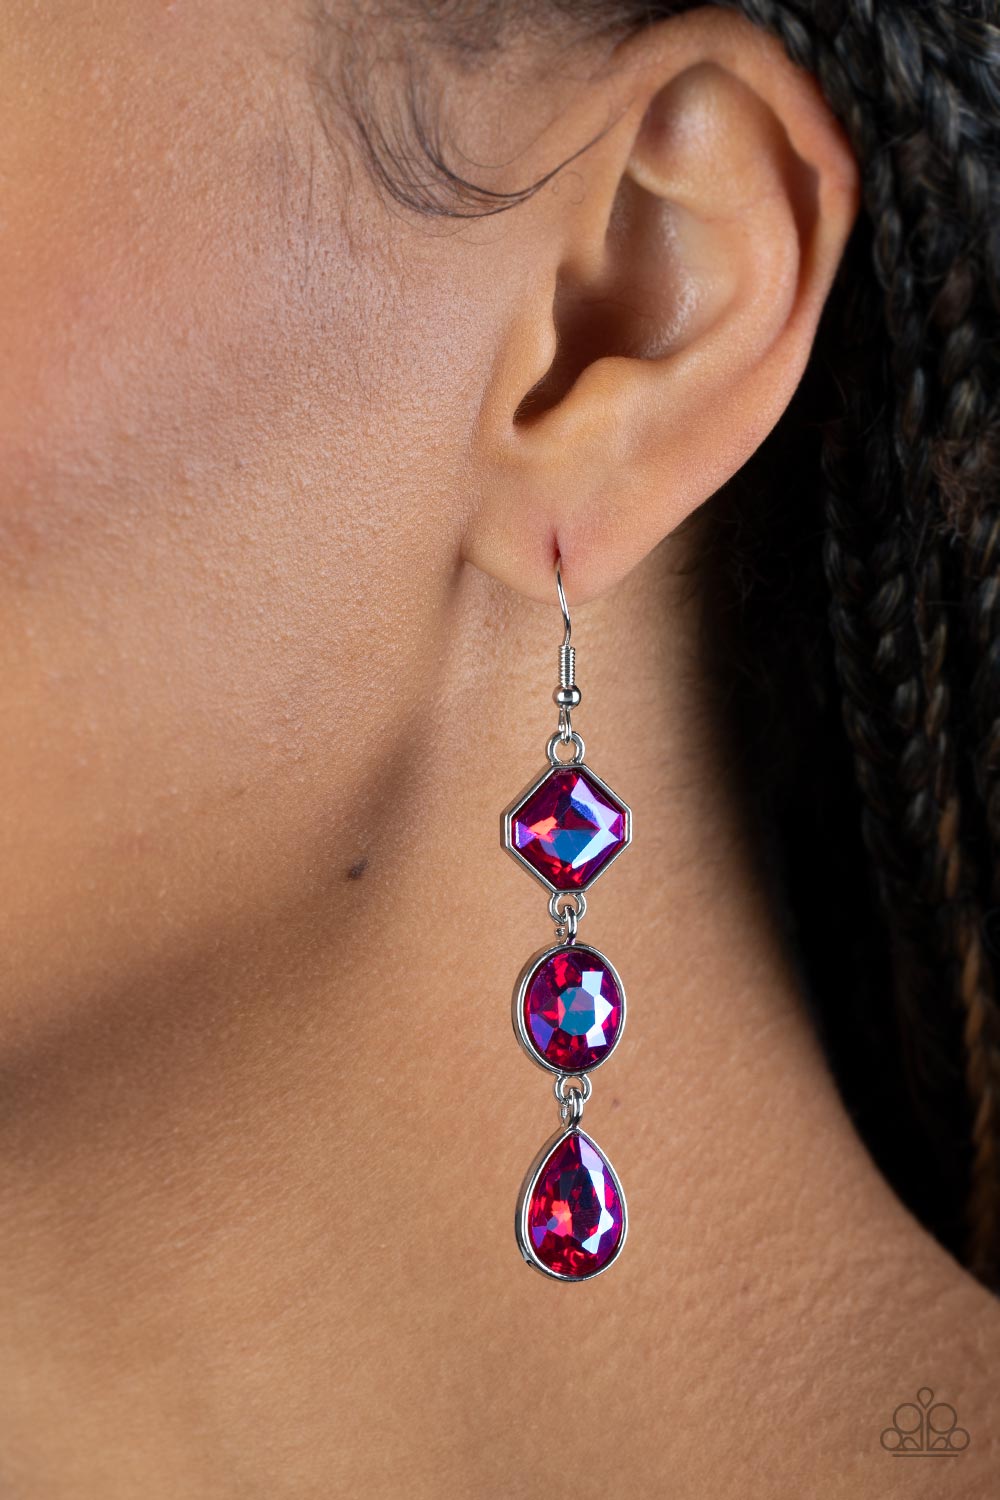 Reflective Rhinestones - Pink Earrings - Paparazzi Accessories